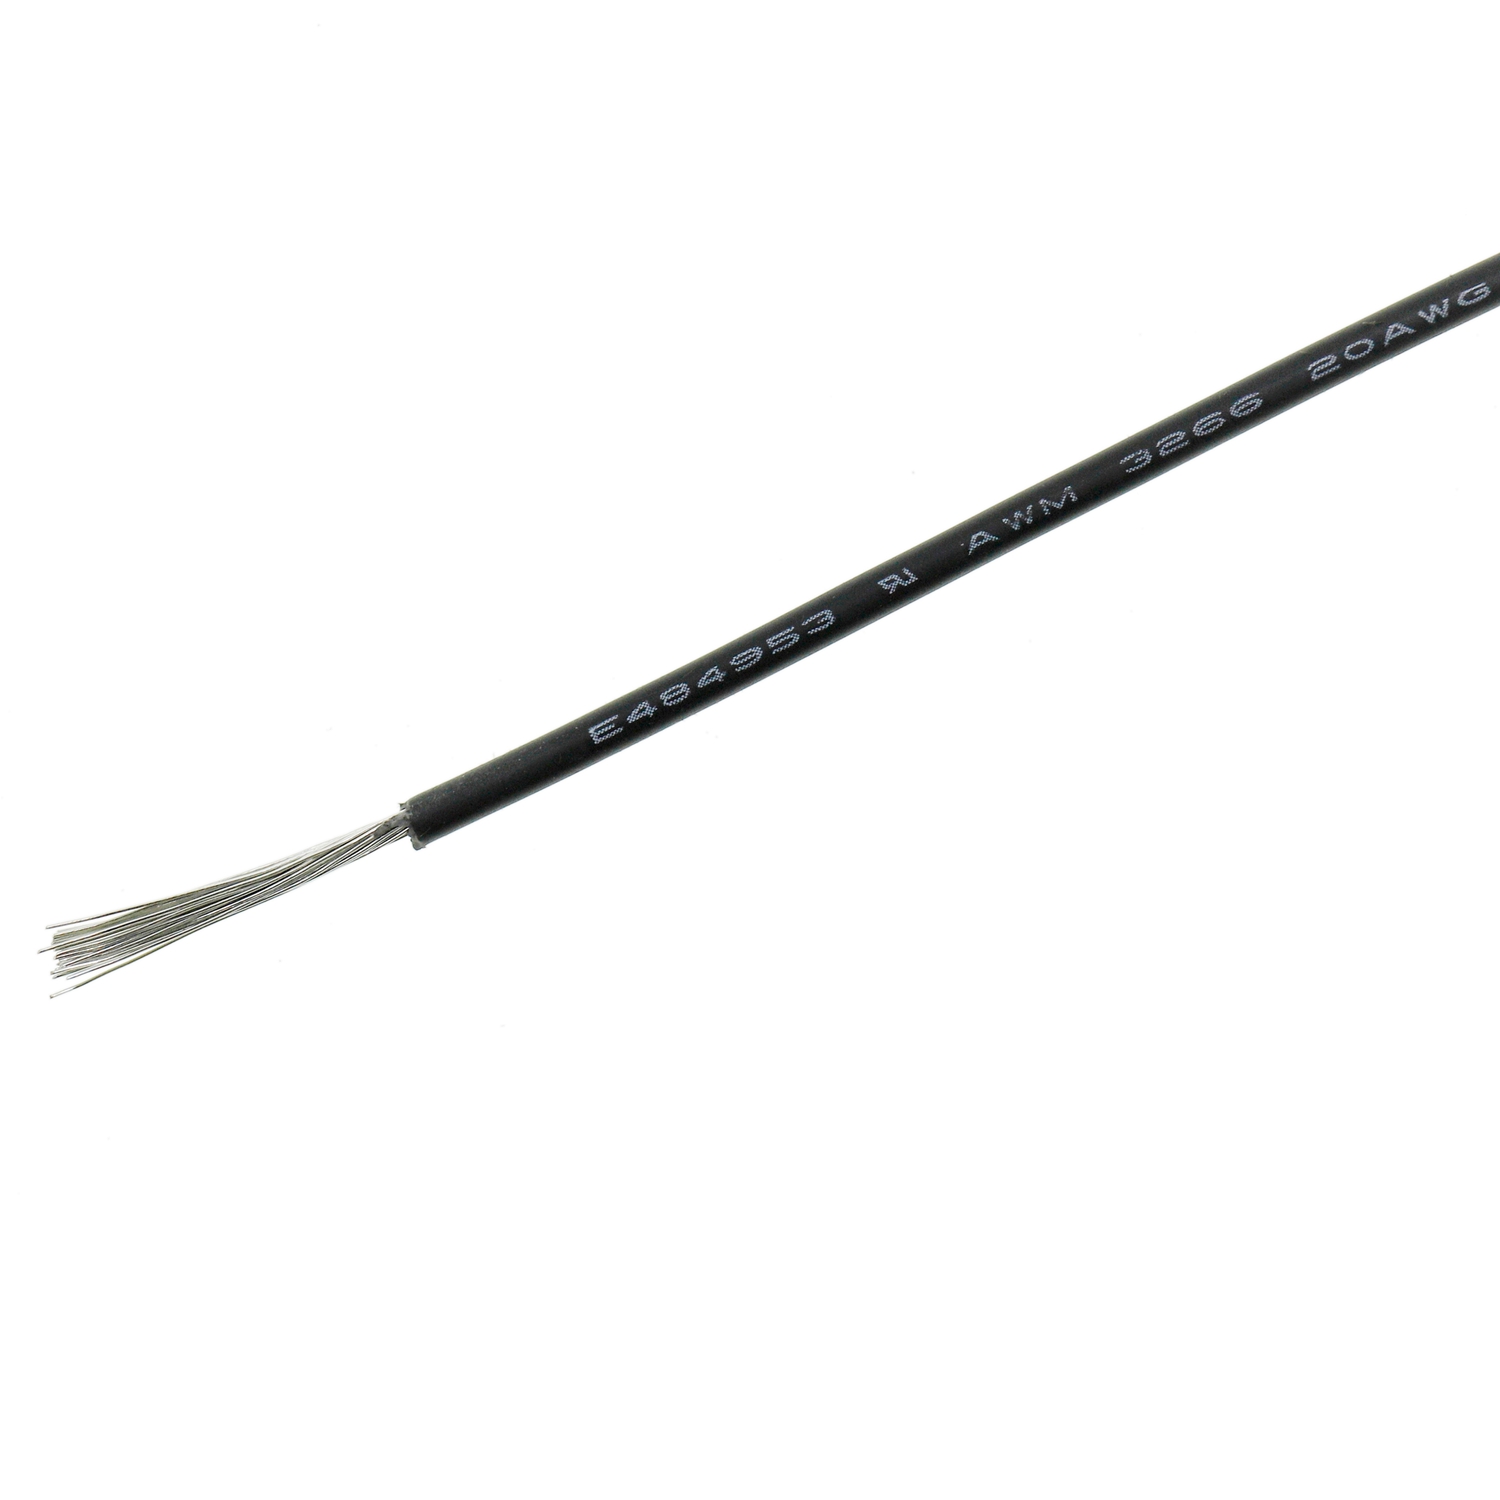 Cable de conexión XLPE de cobre estañado UL3266